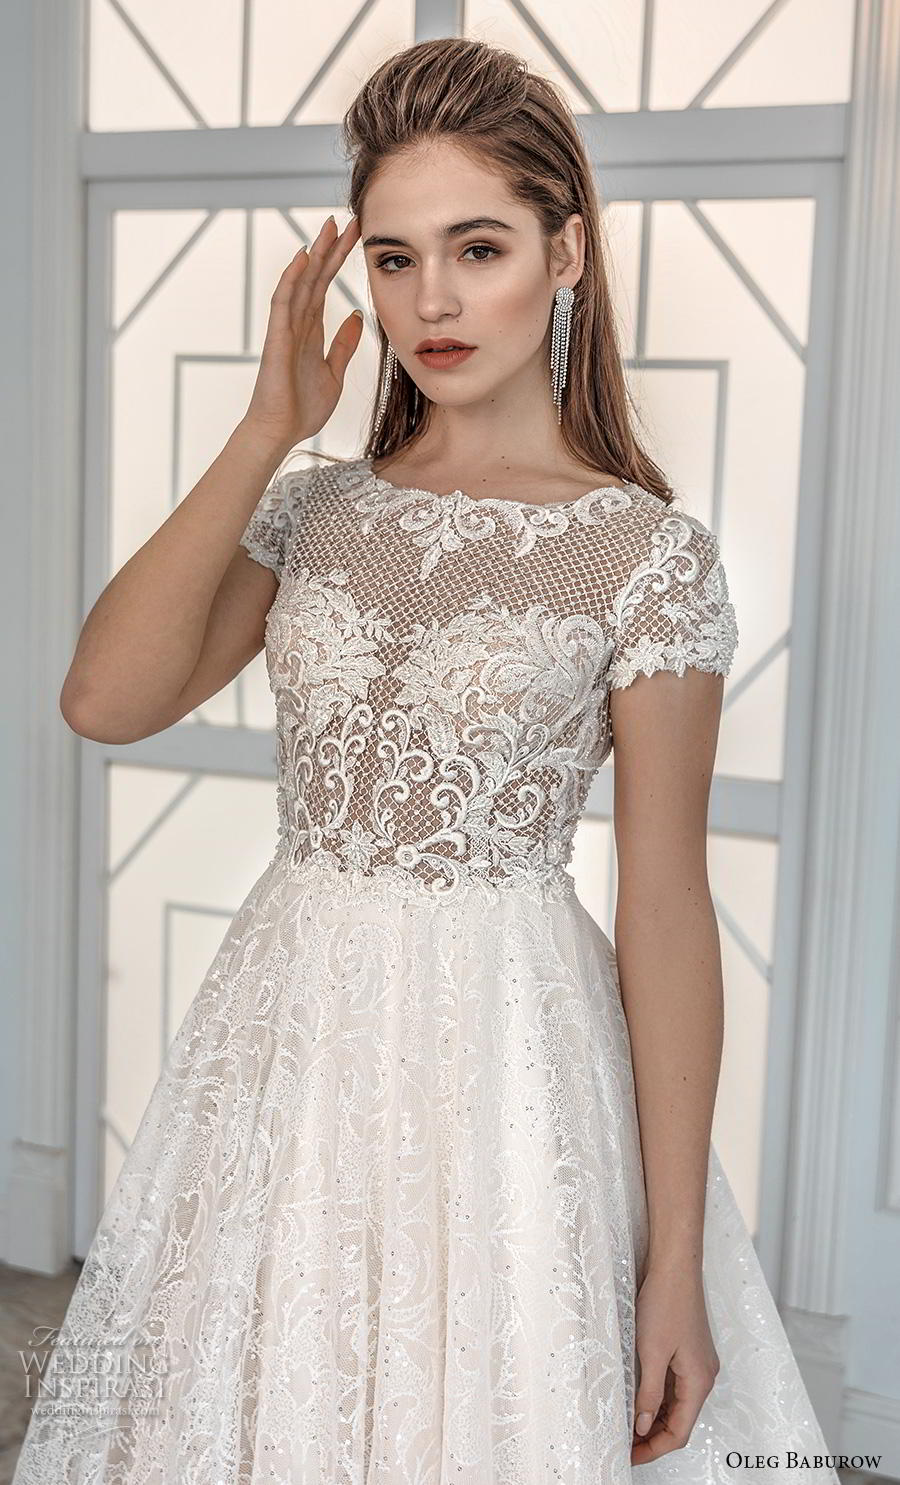 Oleg Baburow 2019 Wedding Dresses — “Classic” Bridal Collection ...